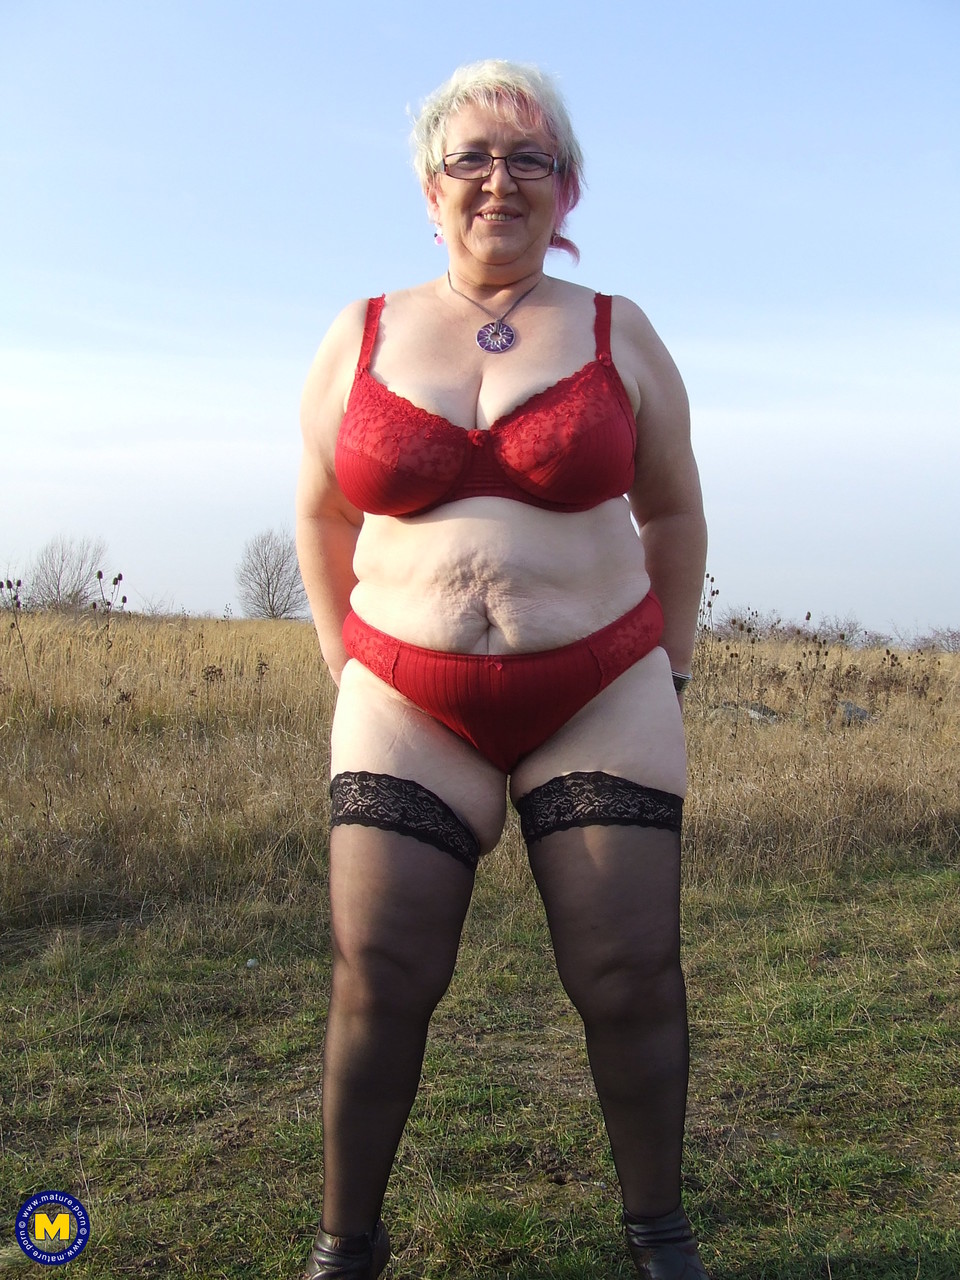 Wild granny with huge saggy tits Silke poses in lingerie & masturbates outside foto porno #422616209 | Mature NL Pics, Silke, Granny, porno ponsel